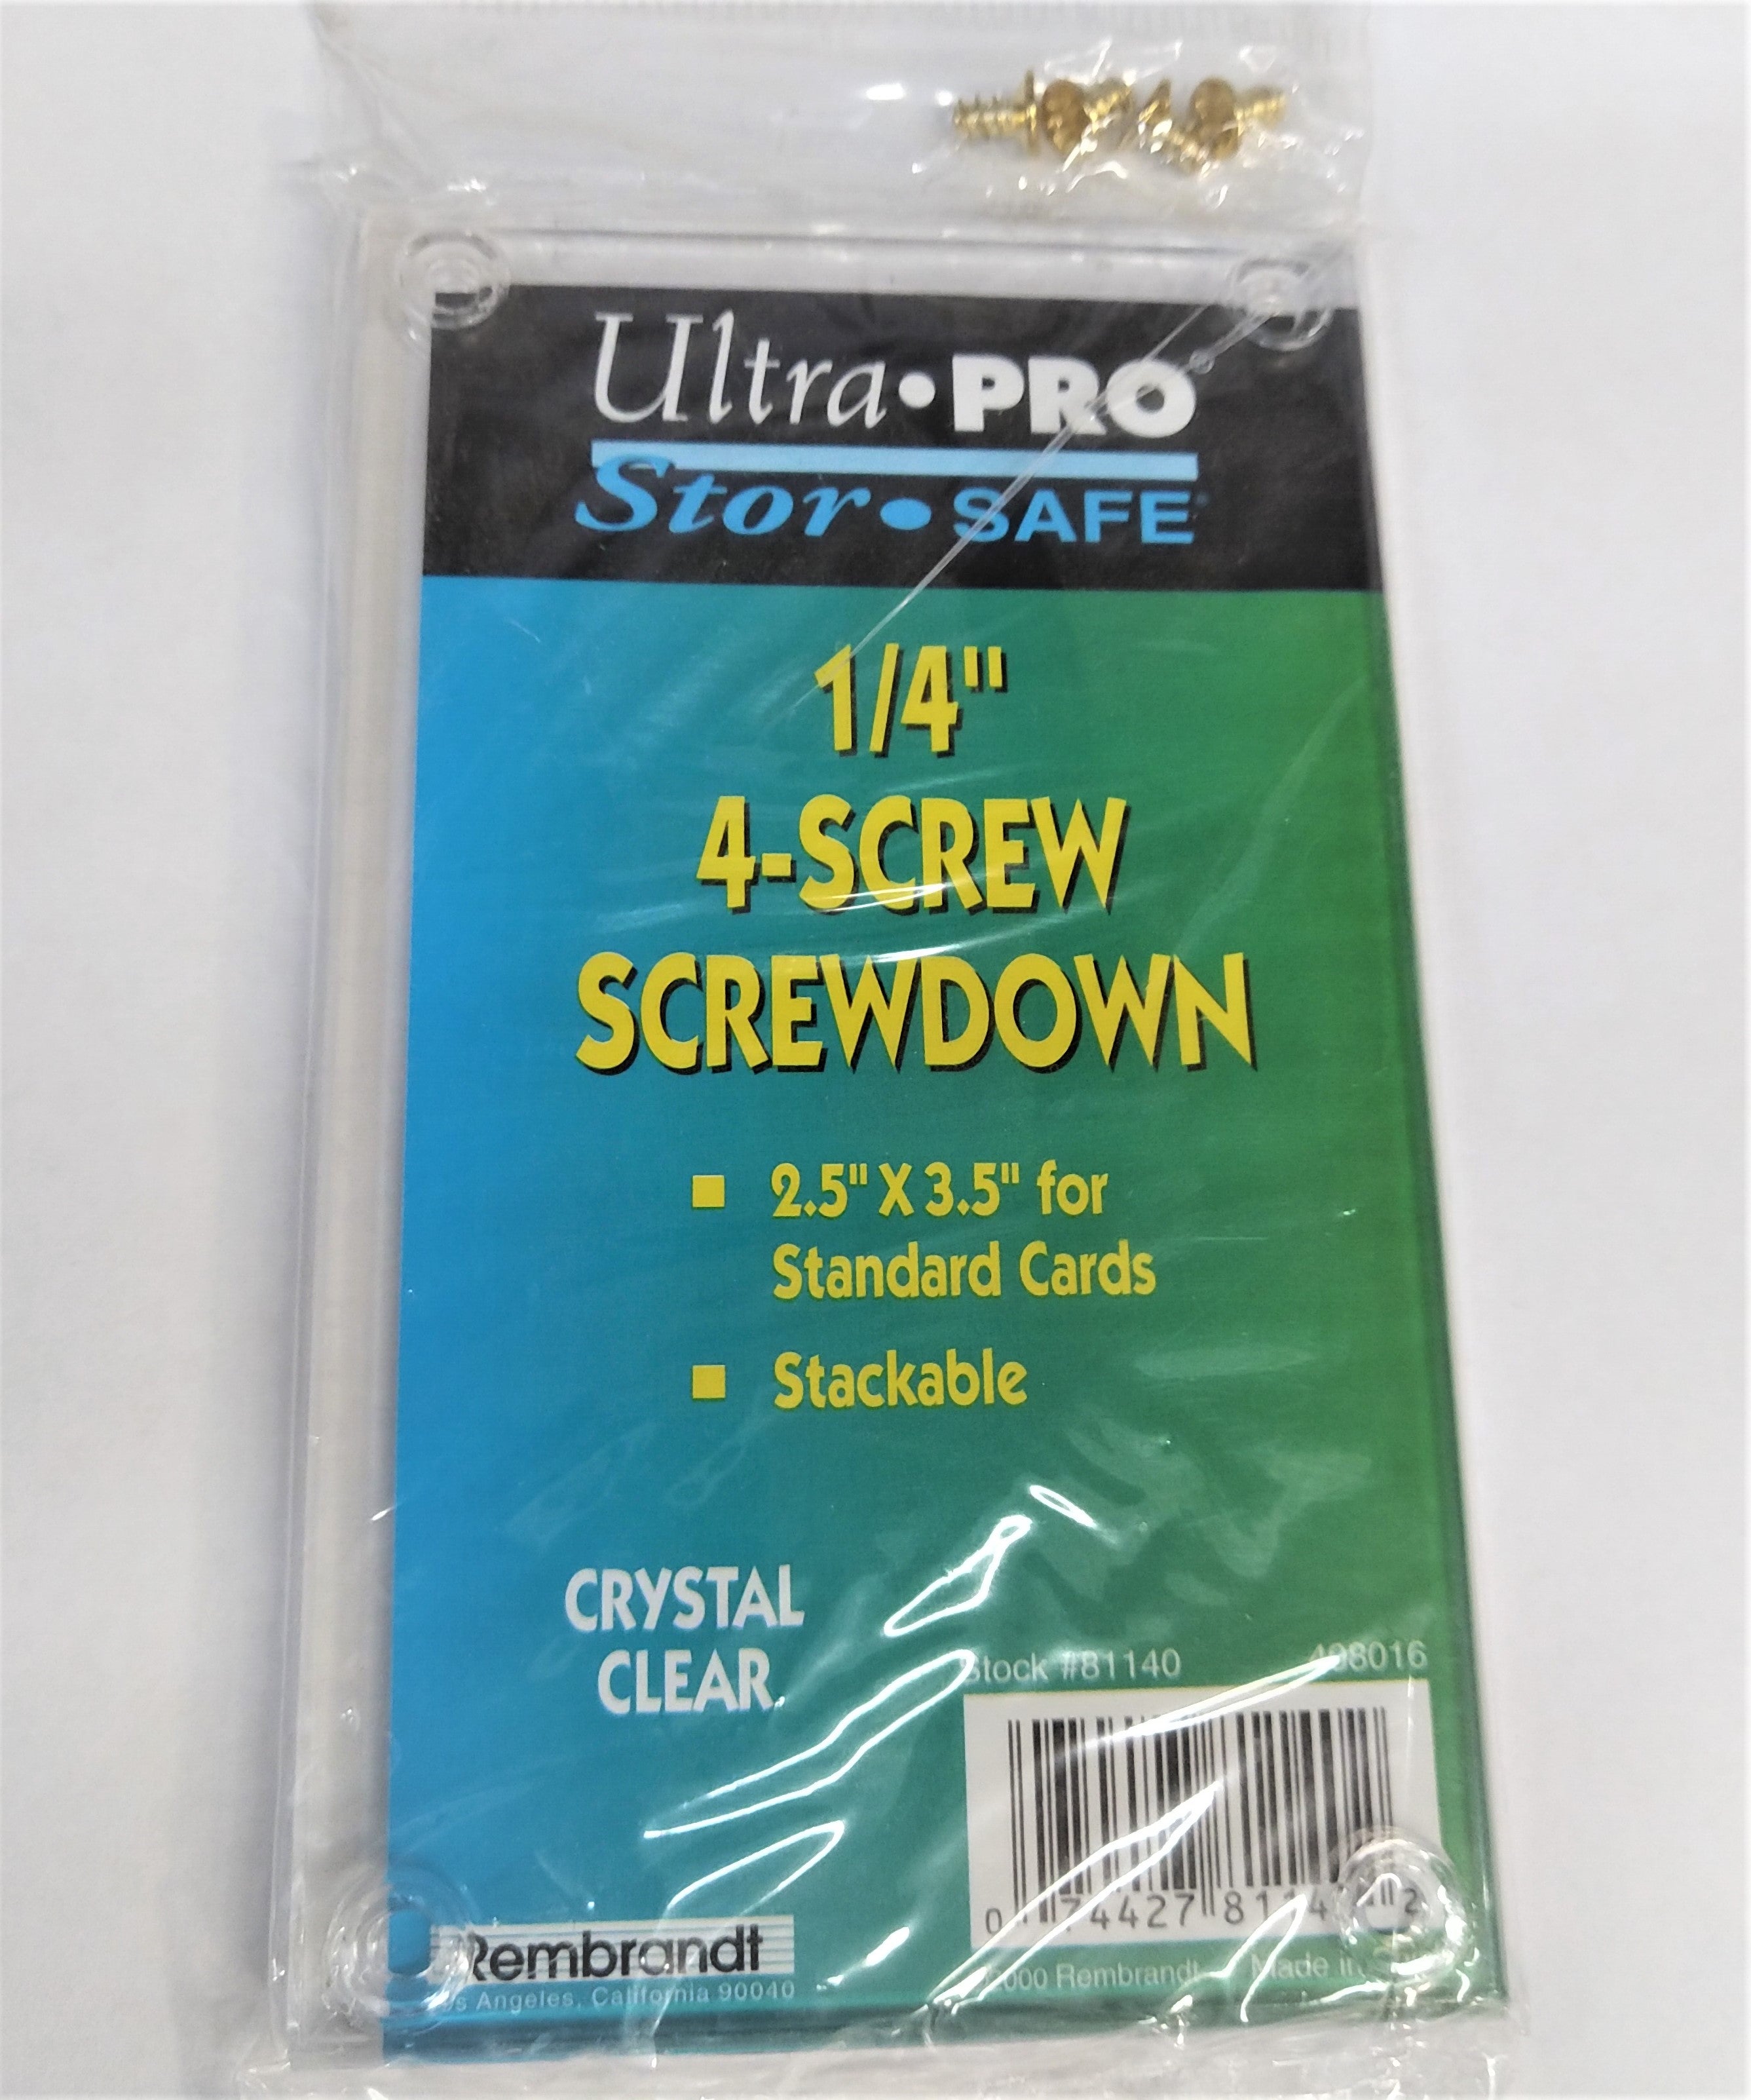 Ultra Pro 1/4" 4-Screw ScrewDown 2.5" x 3.5" (Lot of 5) - BigBoi Cards